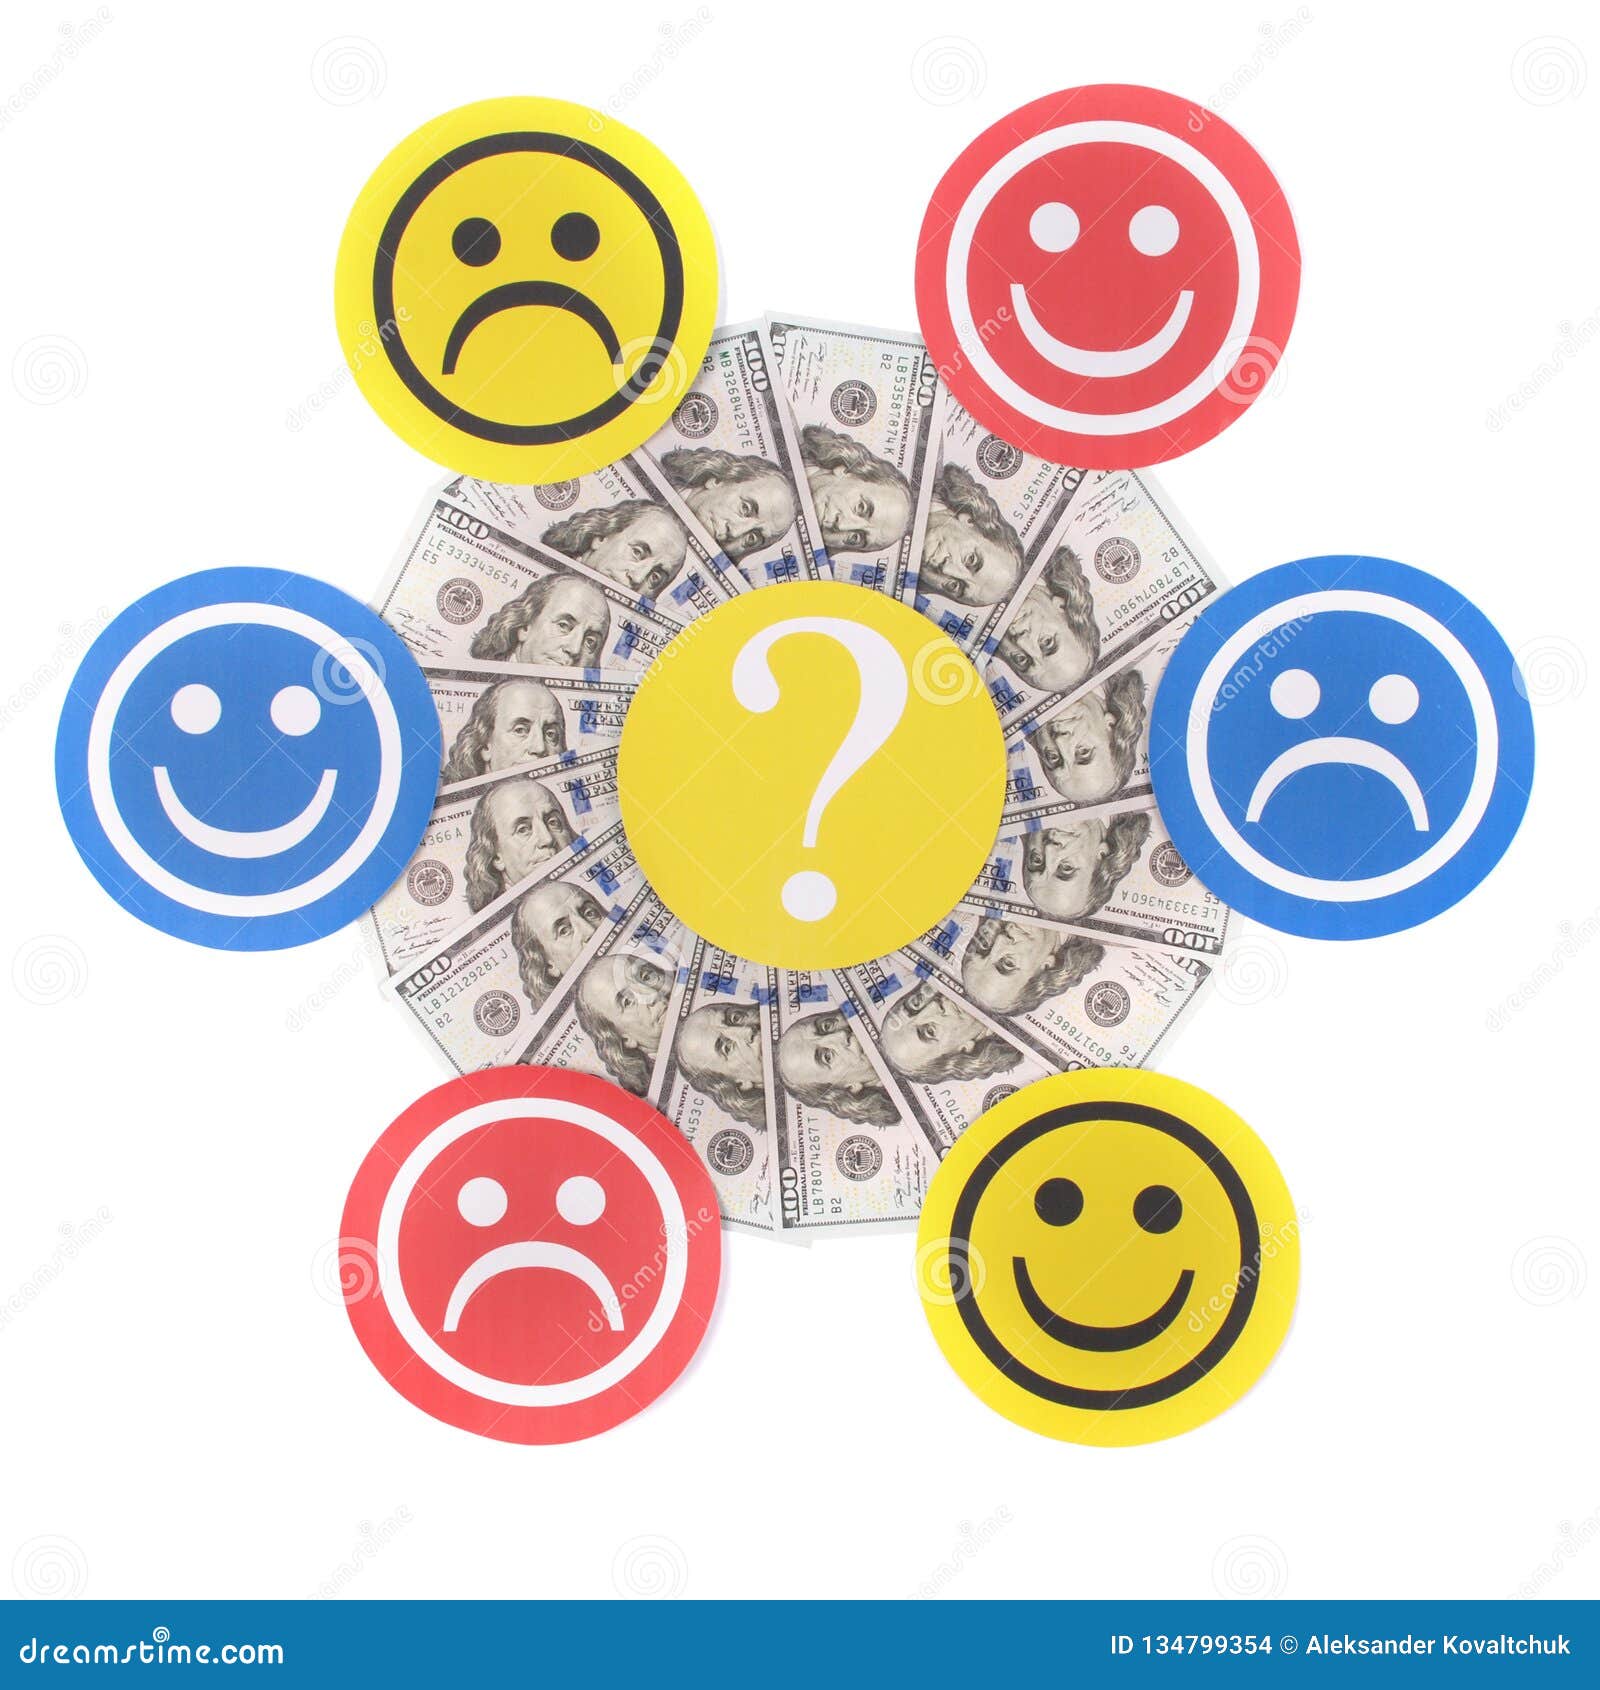 Question Mark Between Smiley And Sad Smiley On Mandala